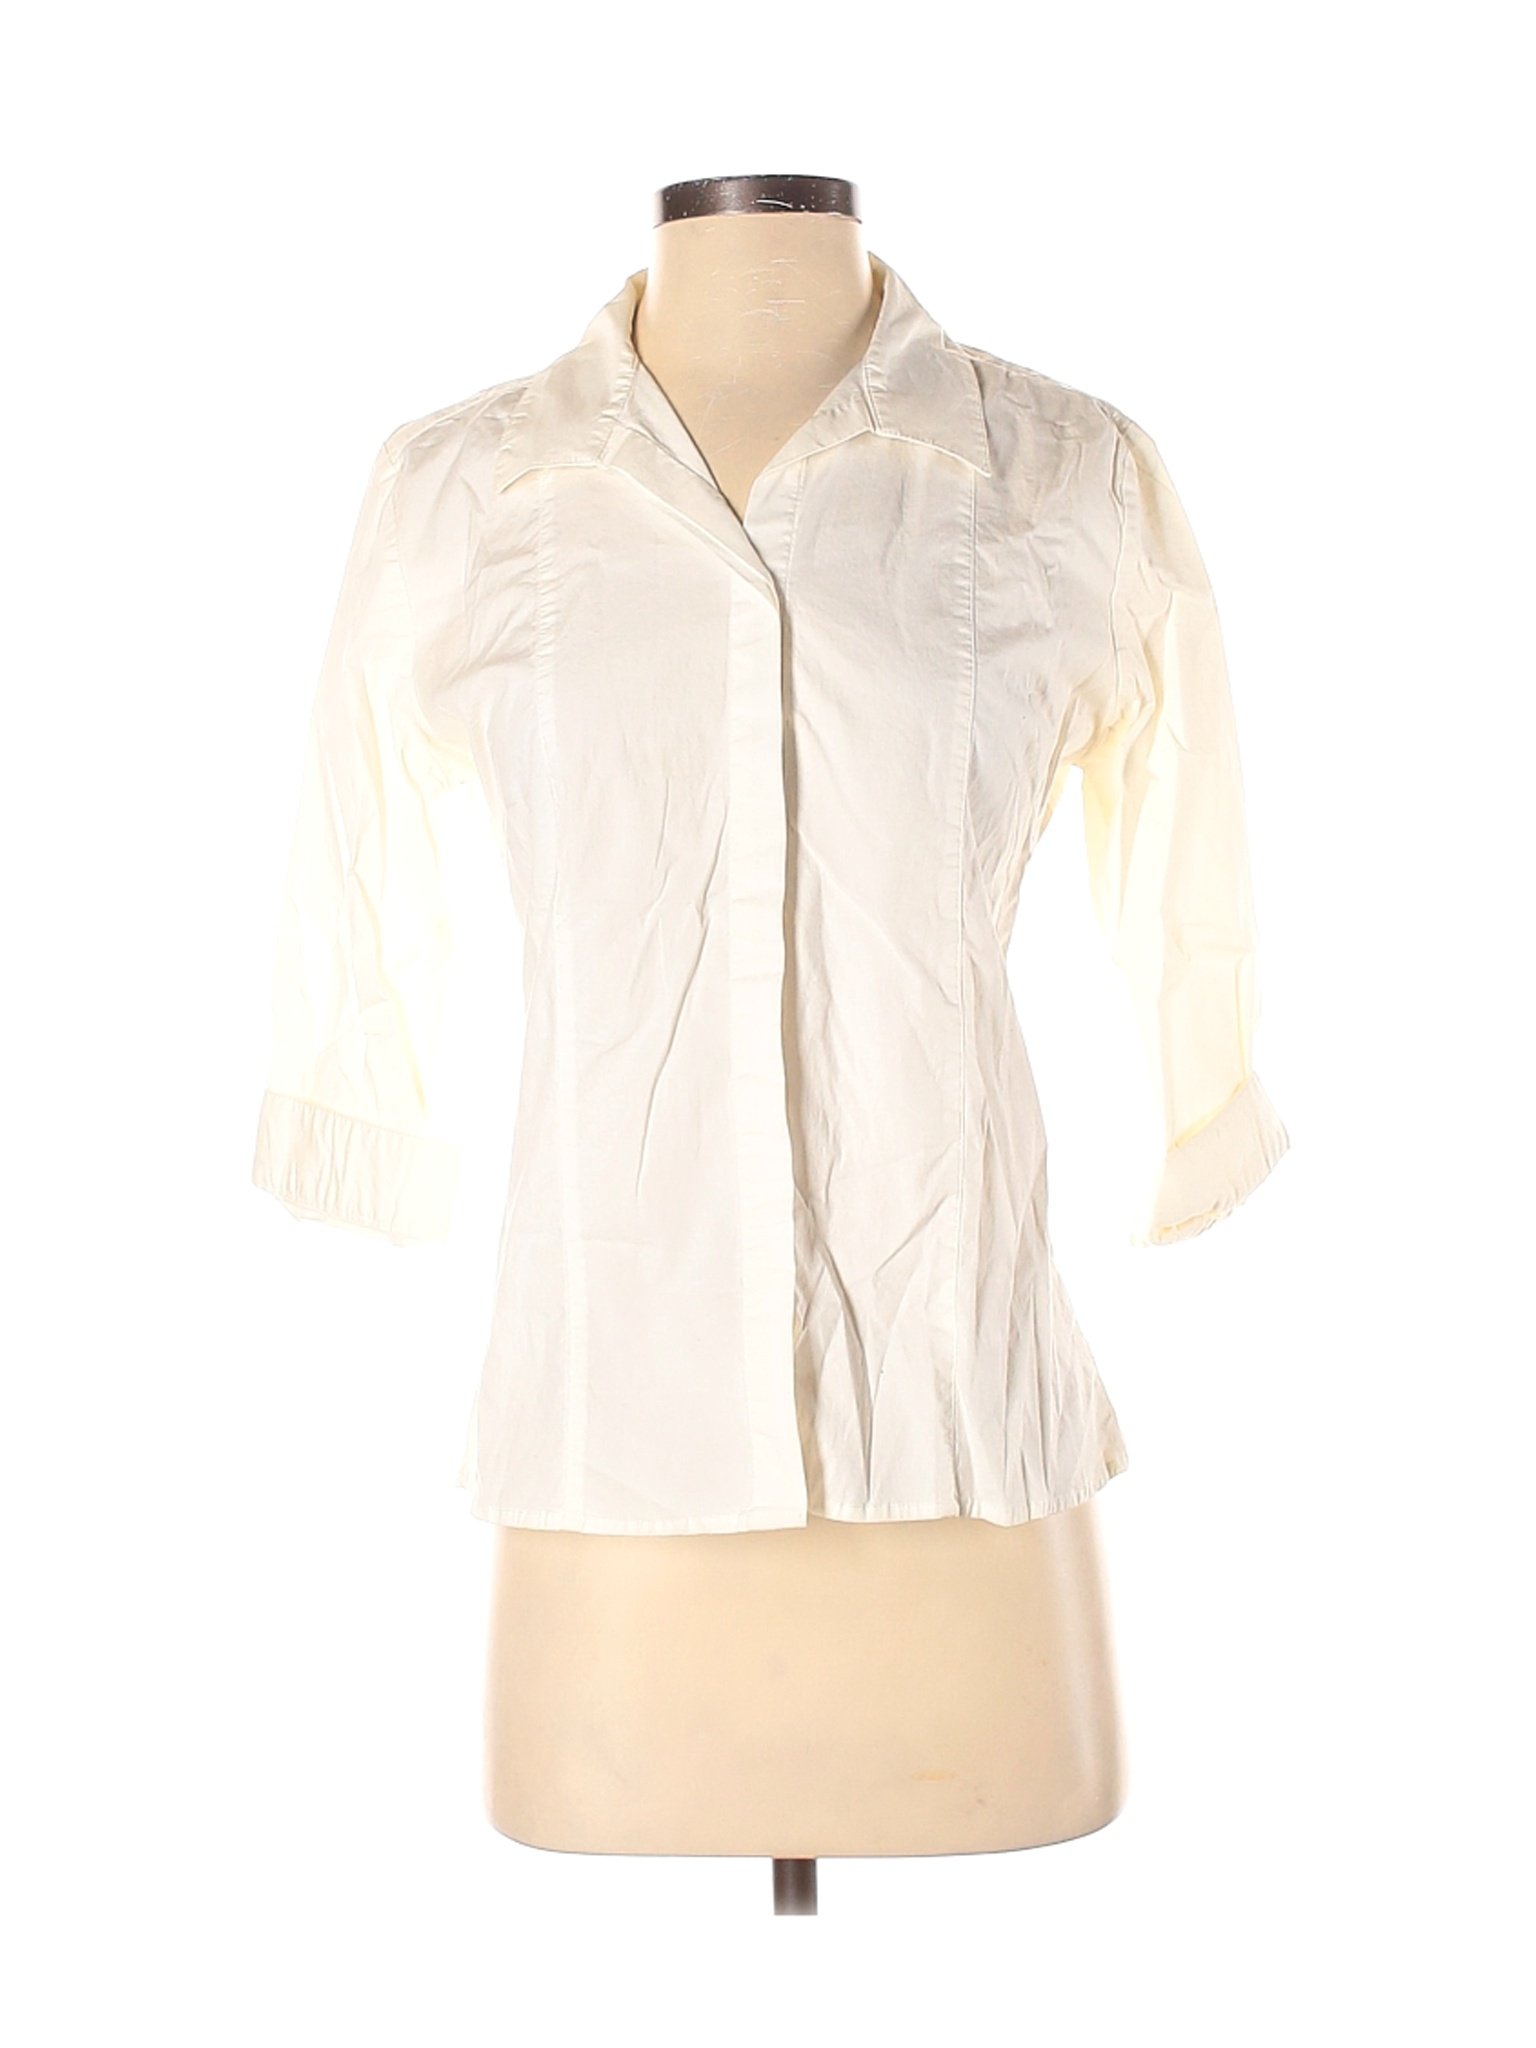 Gap Outlet Women Ivory 3/4 Sleeve Button-Down Shirt S | eBay